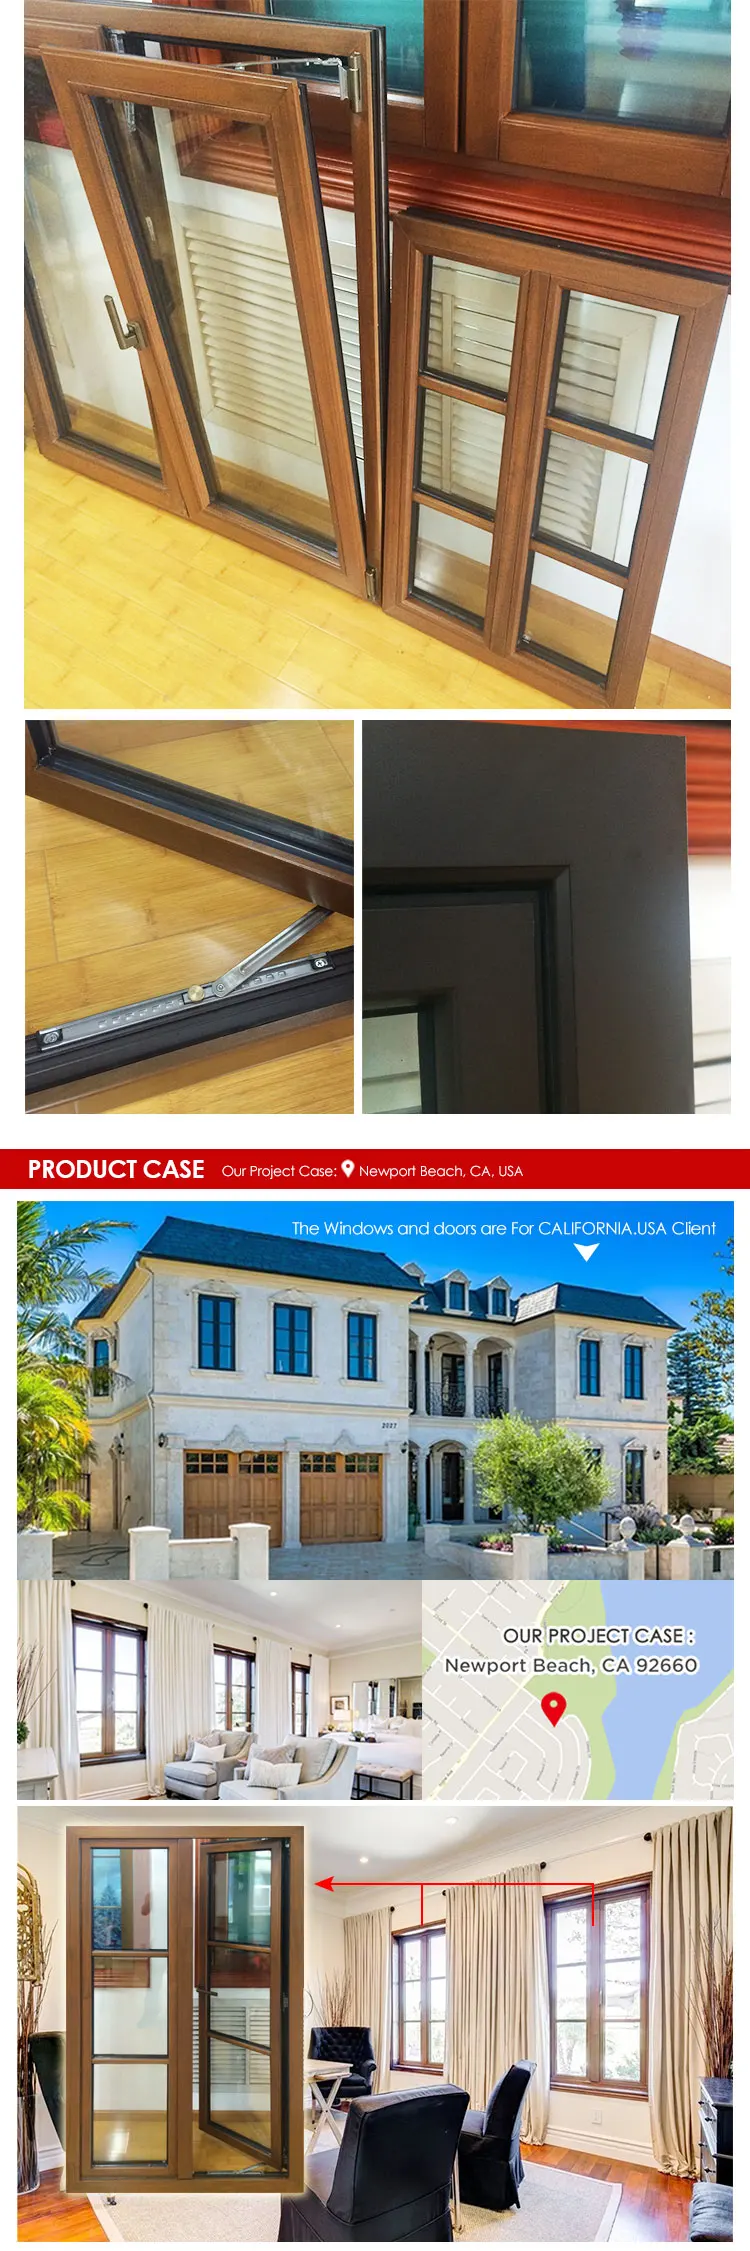 Greensboro aluminum window sash frame suppliers manufacturers wood boxes windows